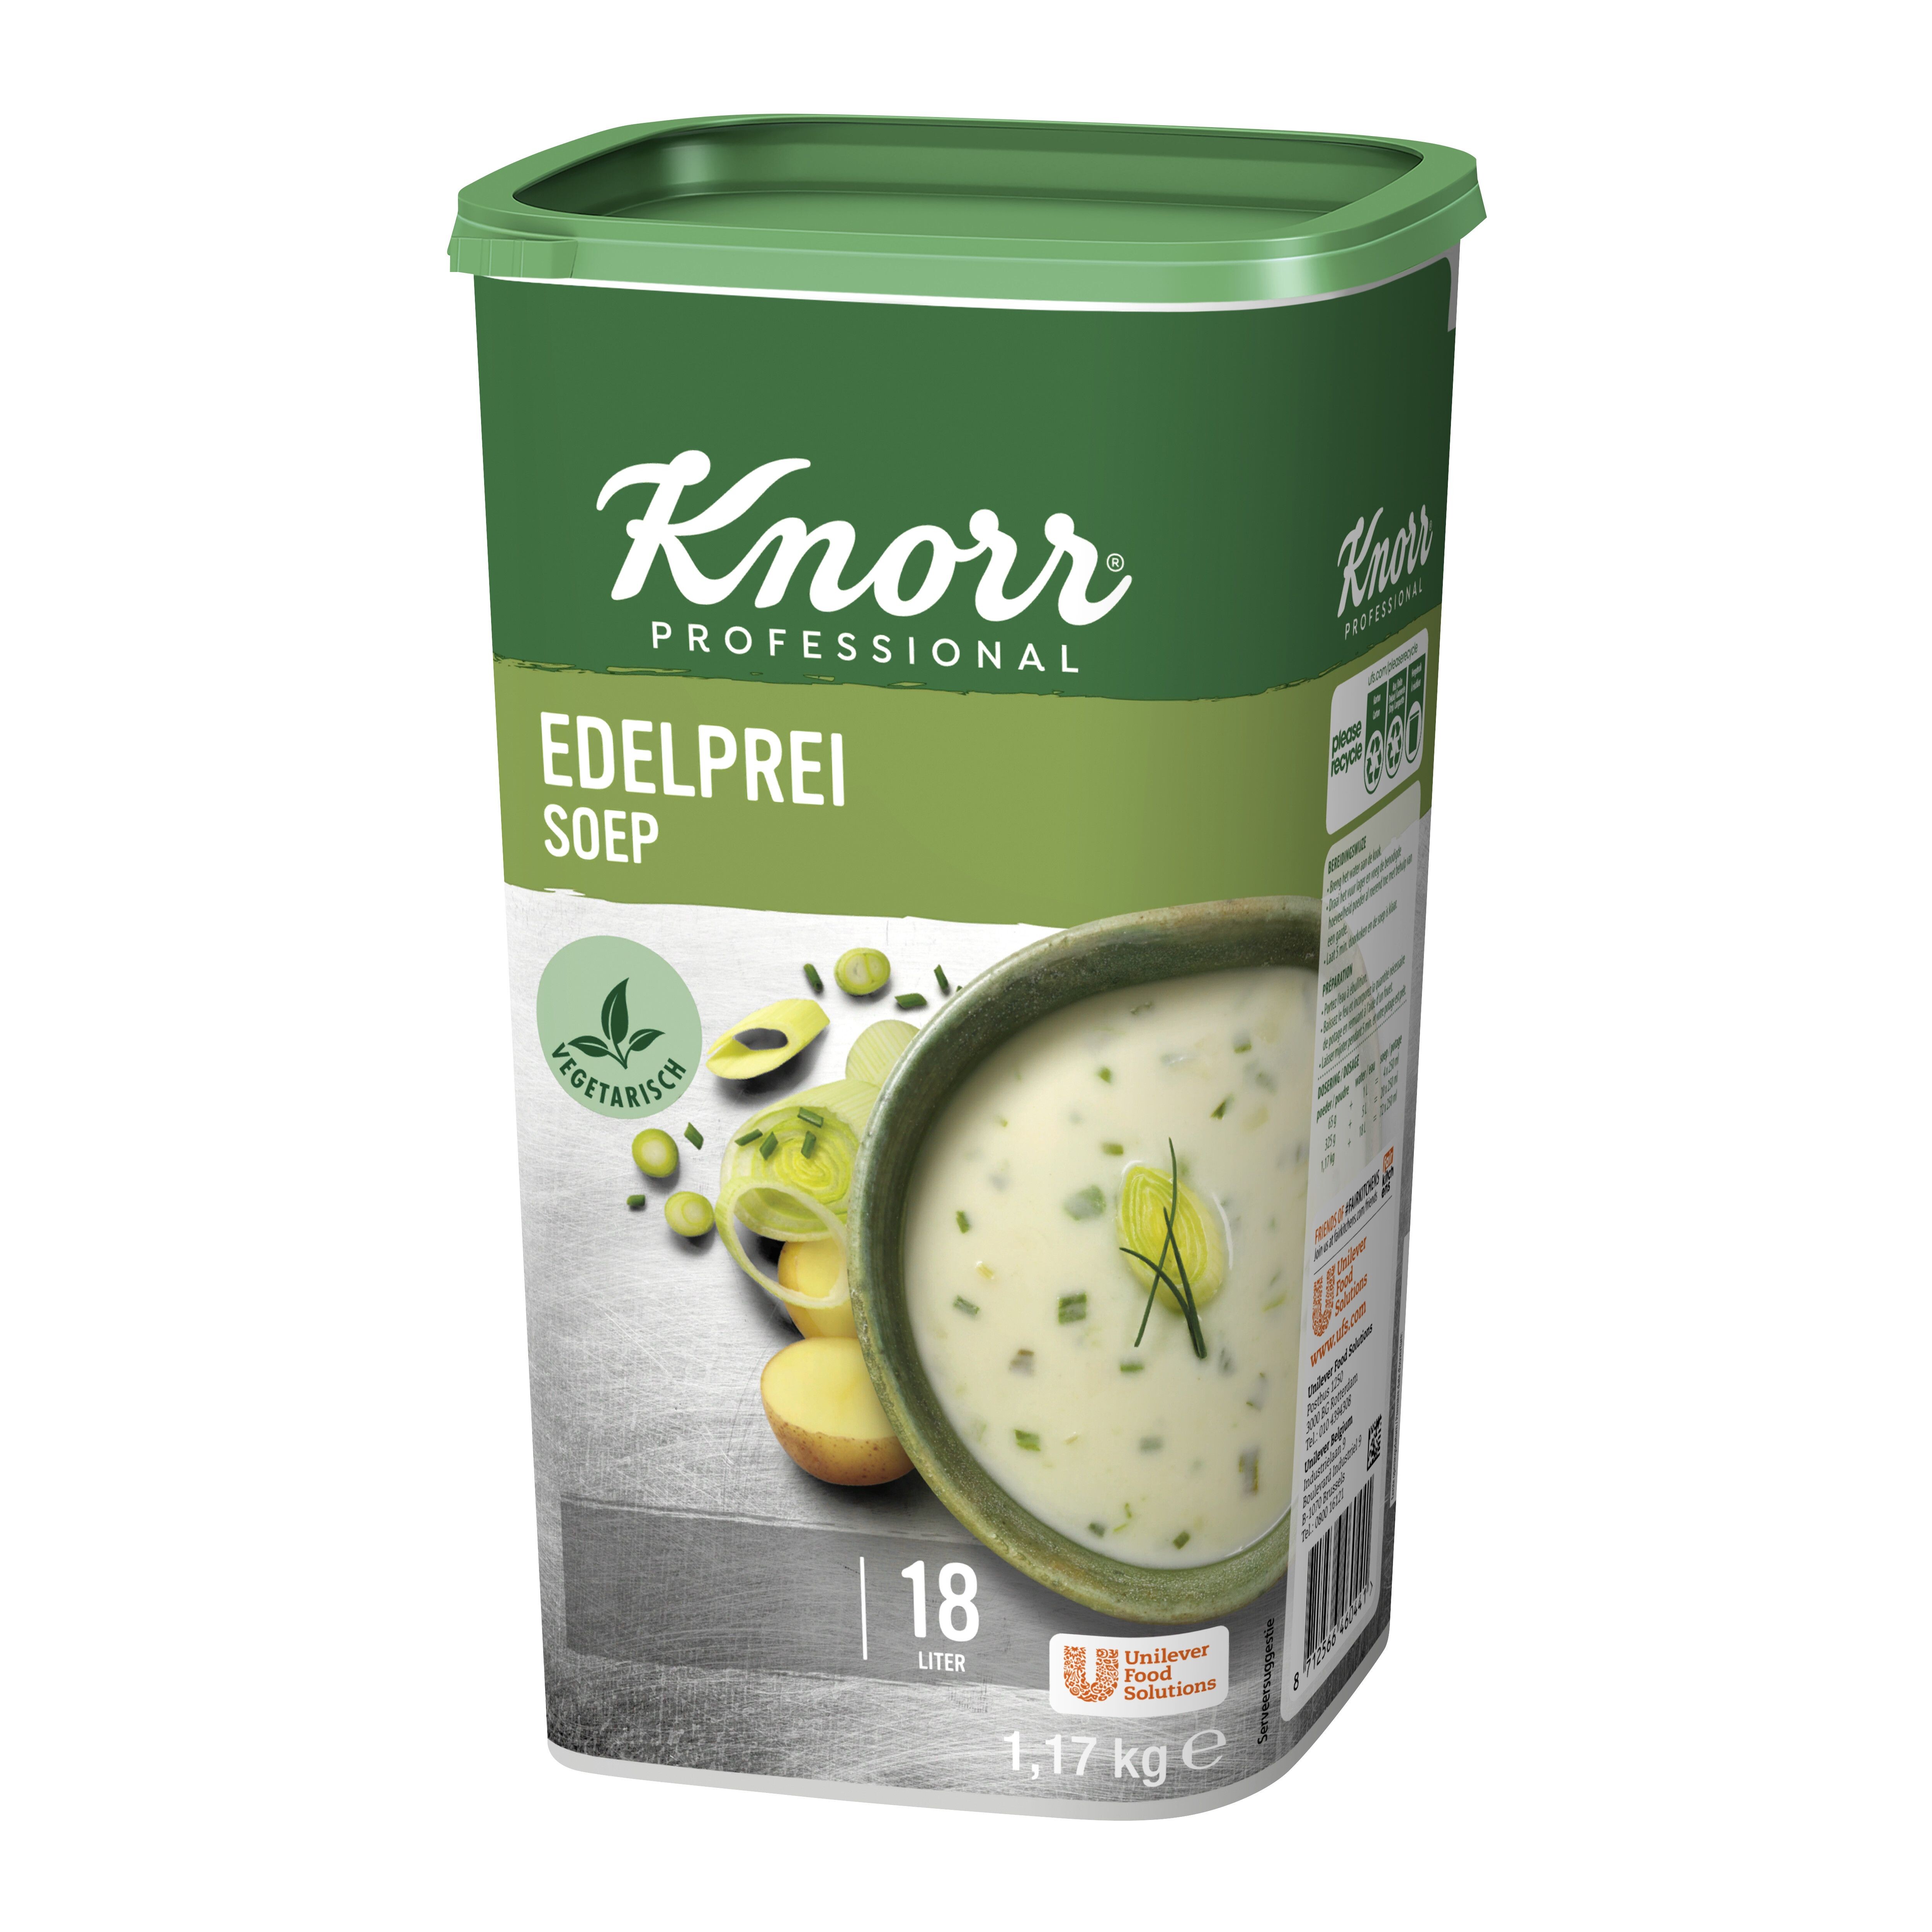 Knorr edelpreisoep 1.17kg Professional